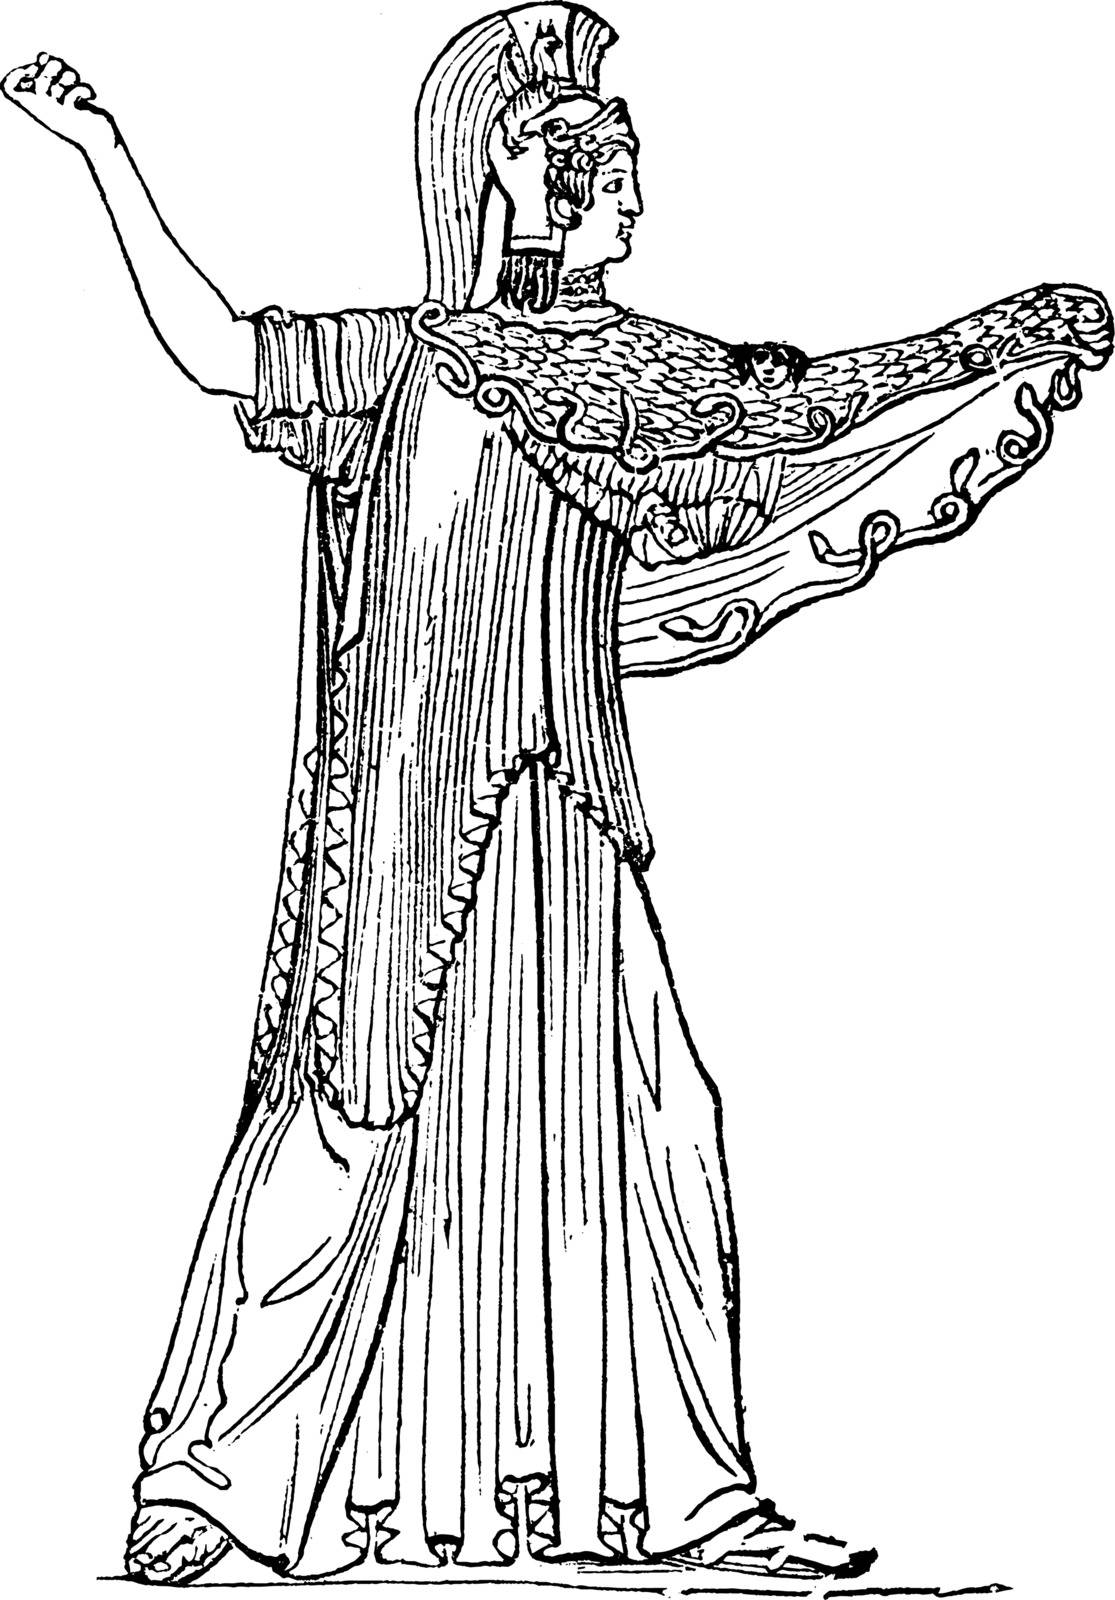 Minerva with aegis vintage illustration.  by Morphart